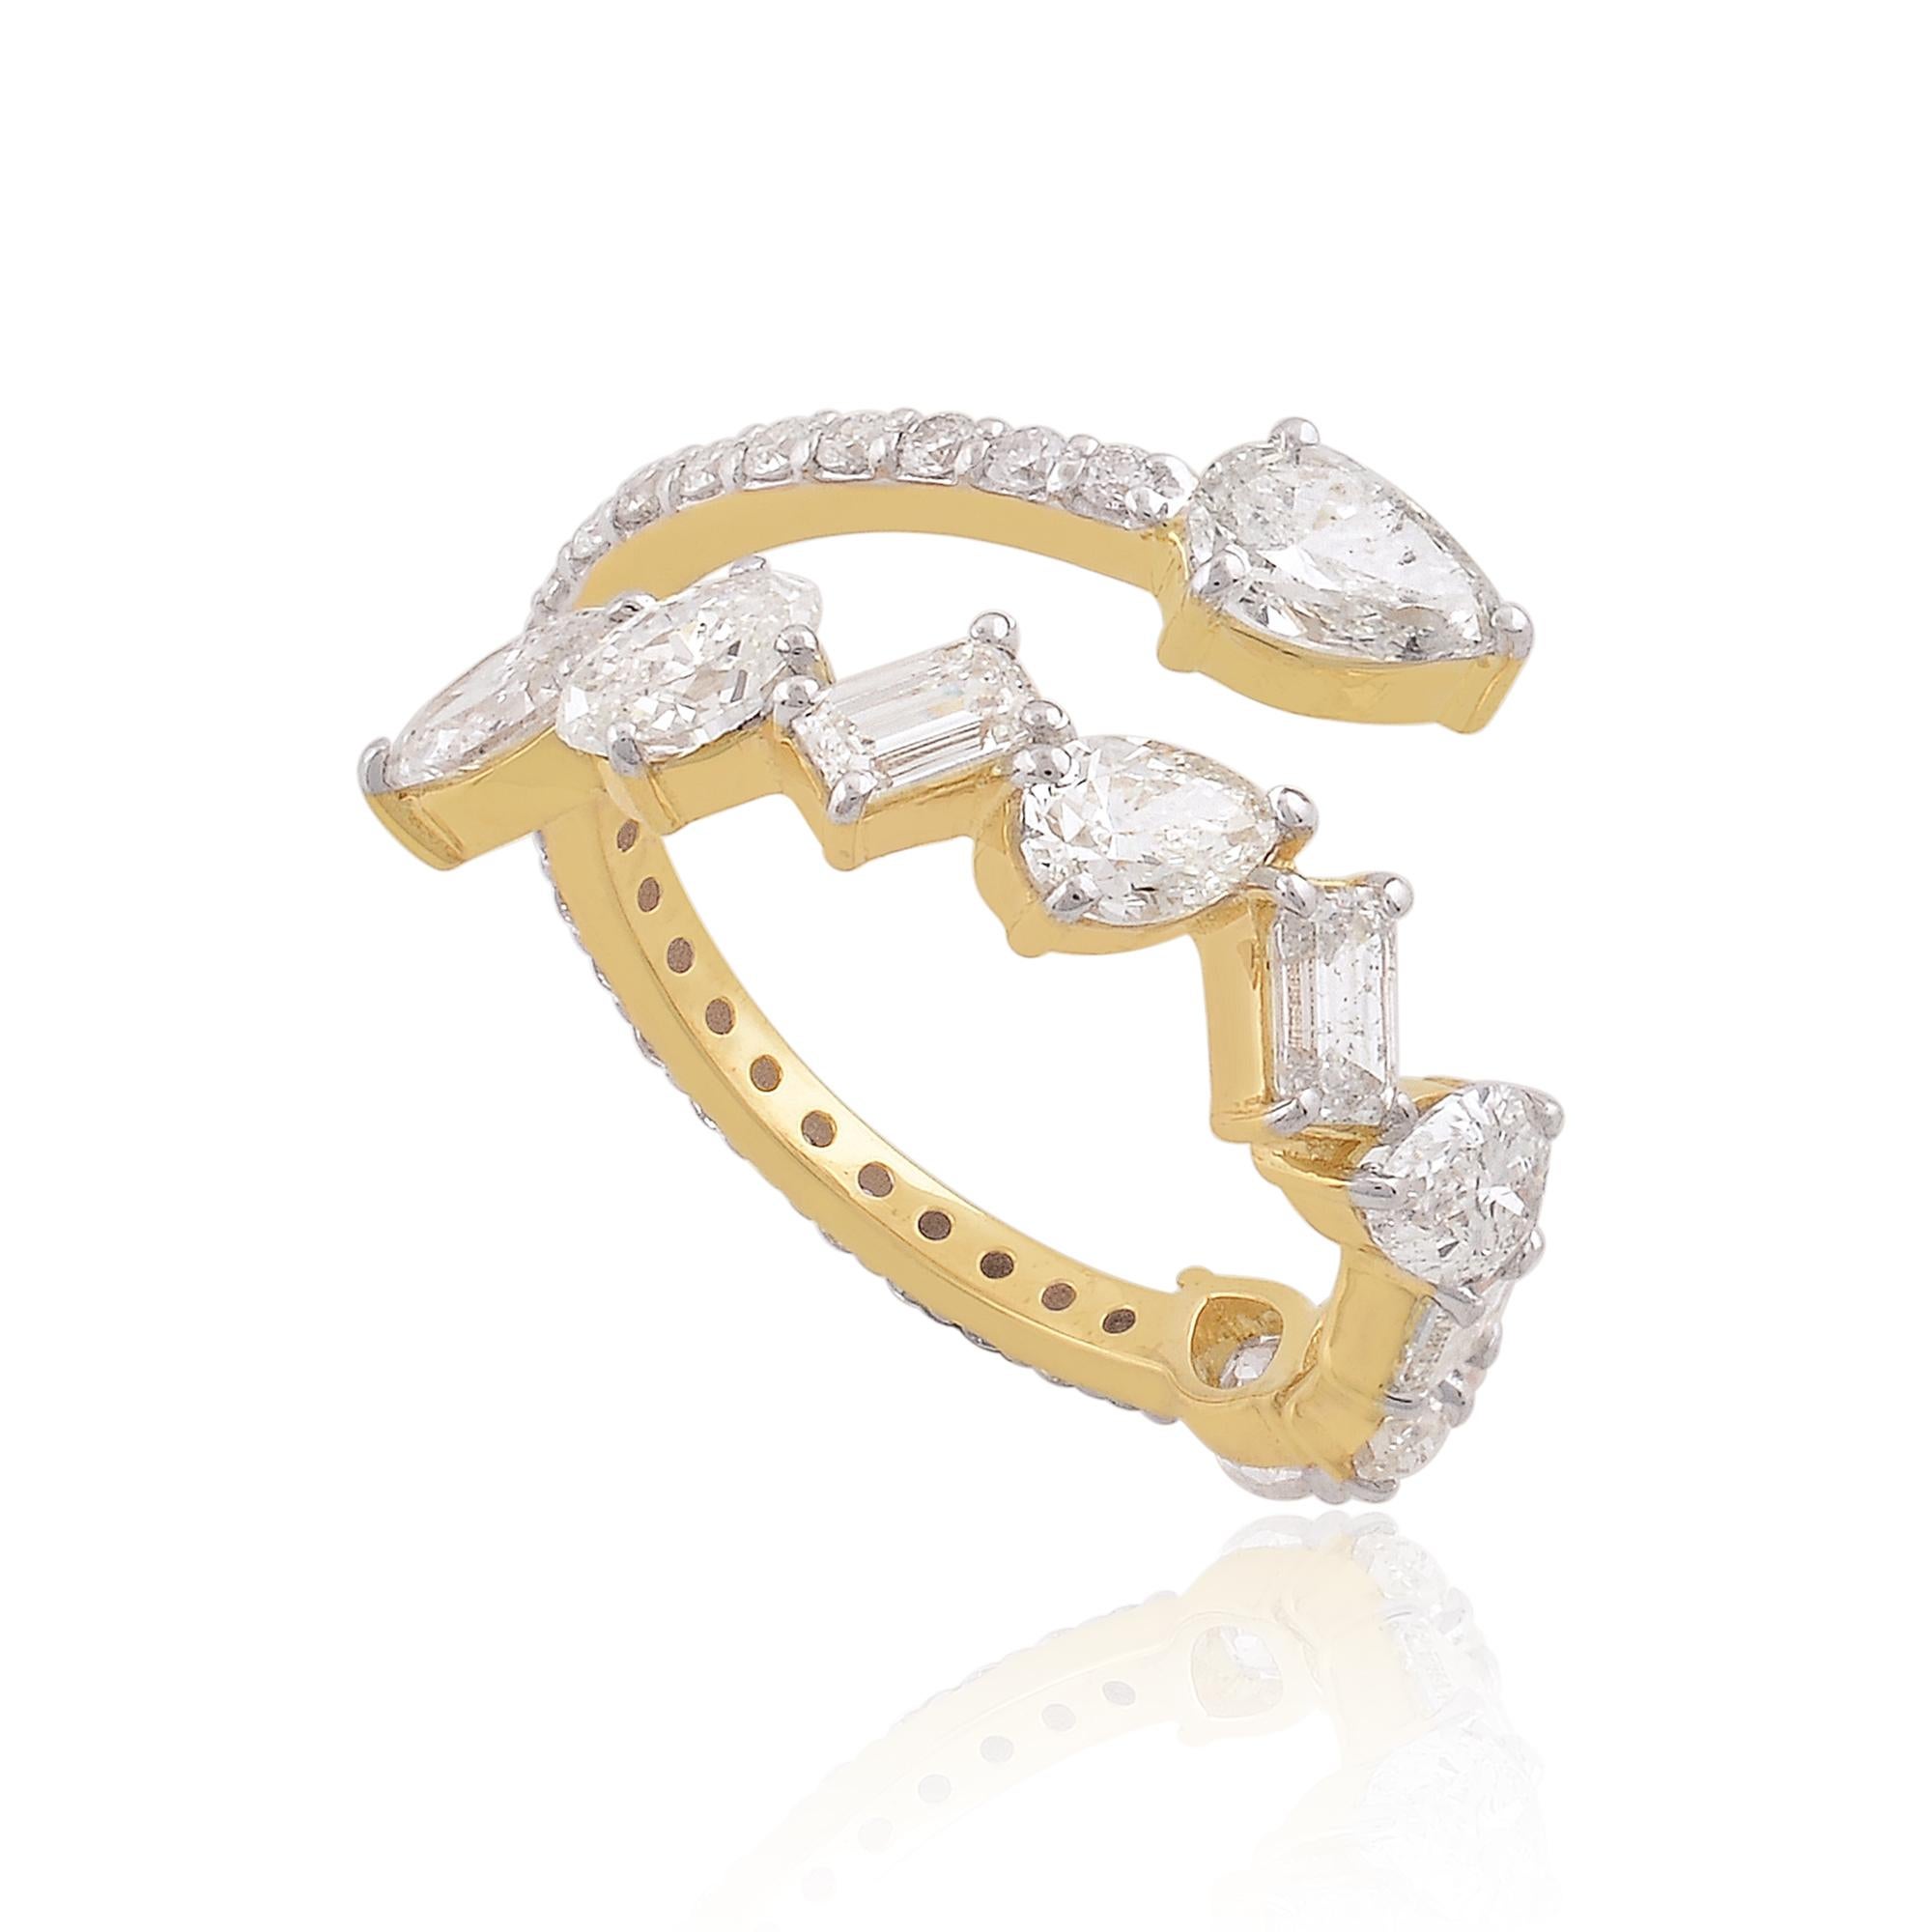 2.35 Carat SI Clarity HI Color Pear Diamond Wrap Ring 14k Yellow Gold Jewelry Pour femmes en vente